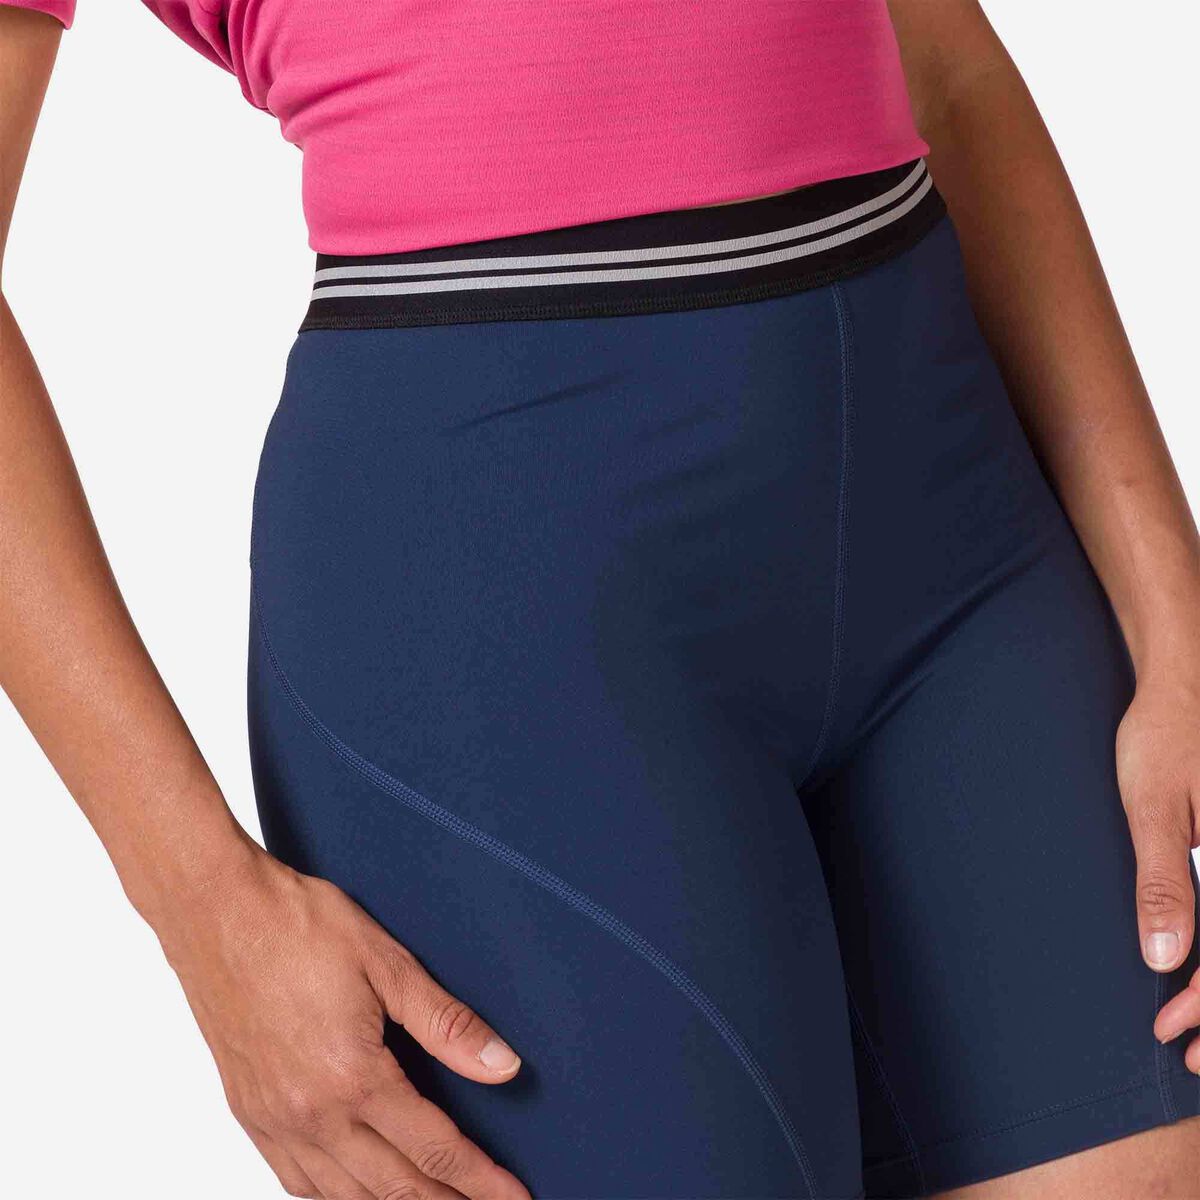 Women's tight shorts